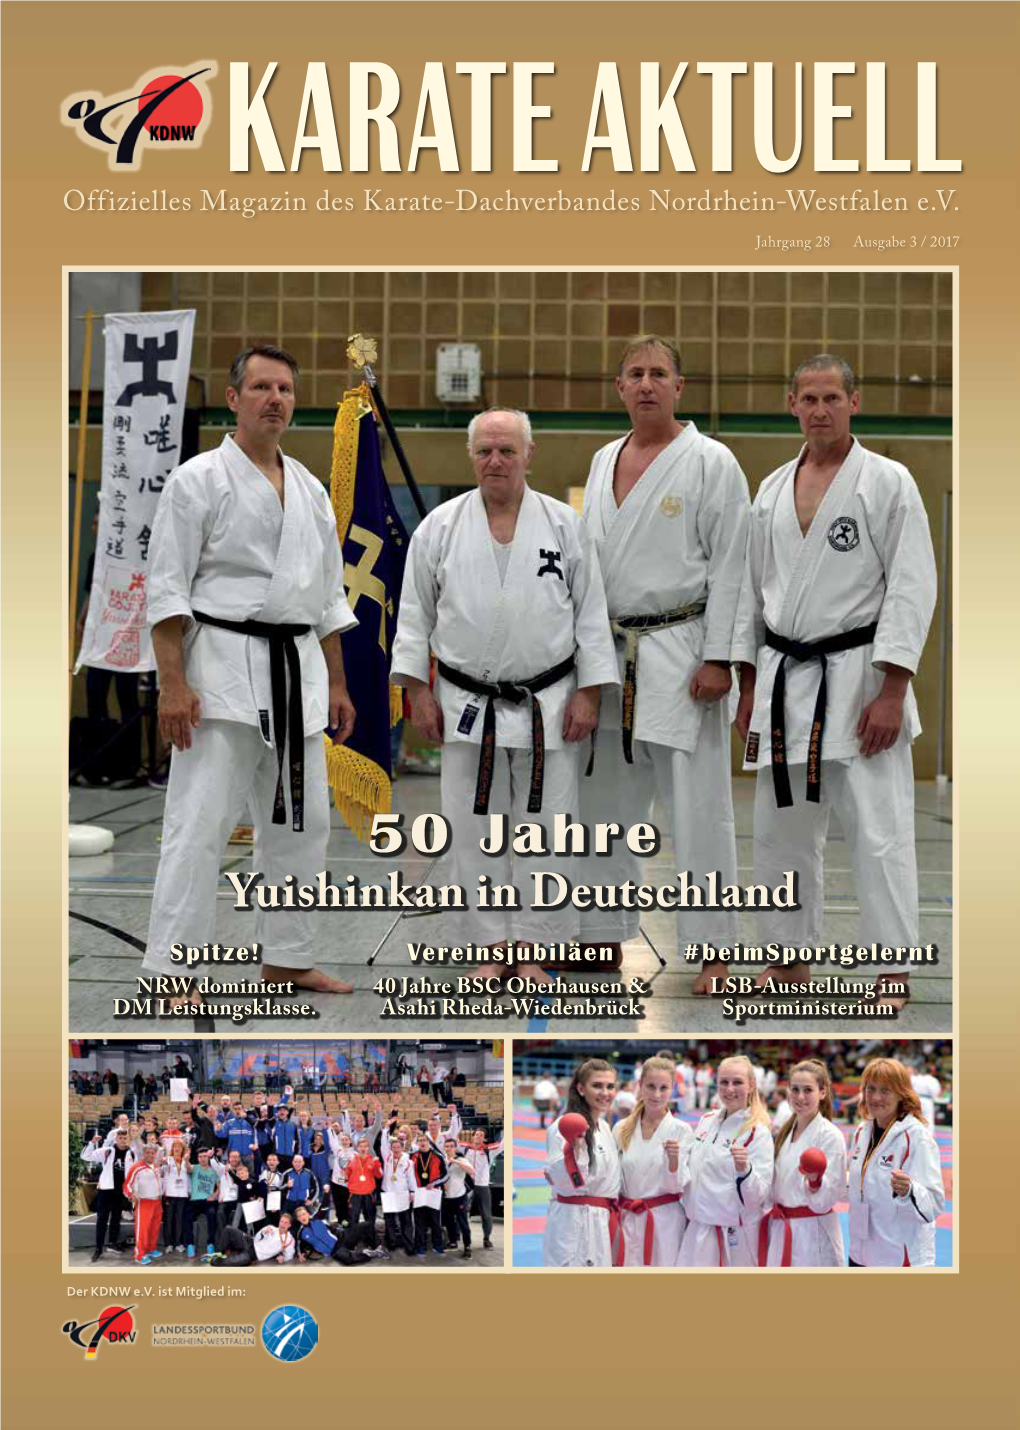 KARATE AKTUELL Offizielles Magazin Des Karate-Dachverbandes Nordrhein-Westfalen E.V